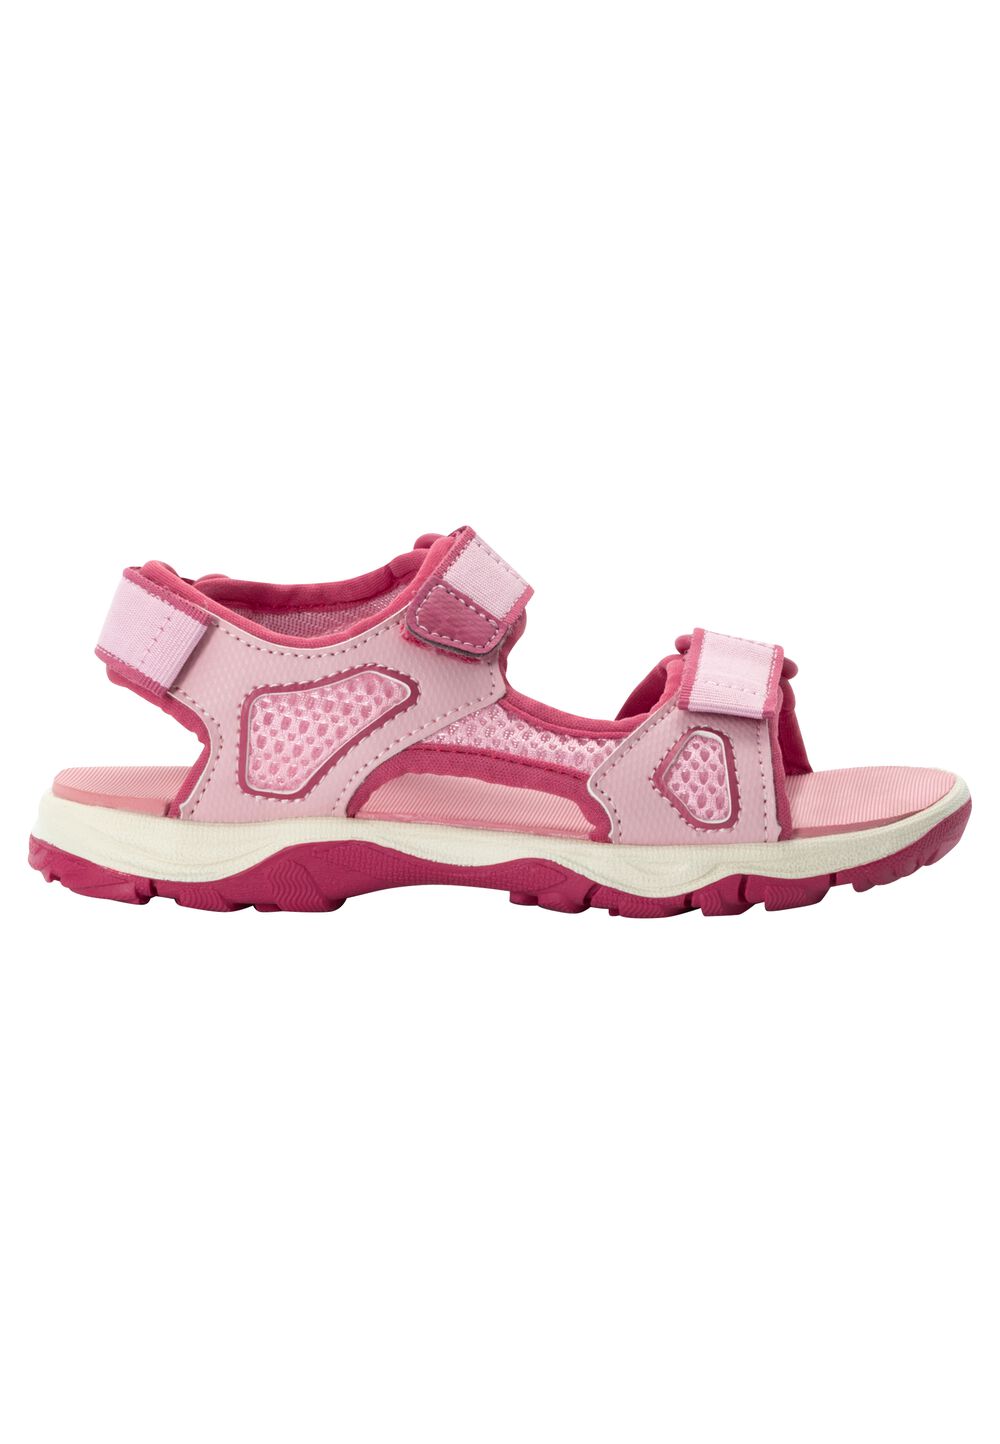 Jack Wolfskin Taraco Beach Sandal Kids Kinderen sandalen 40 soft pink soft pink